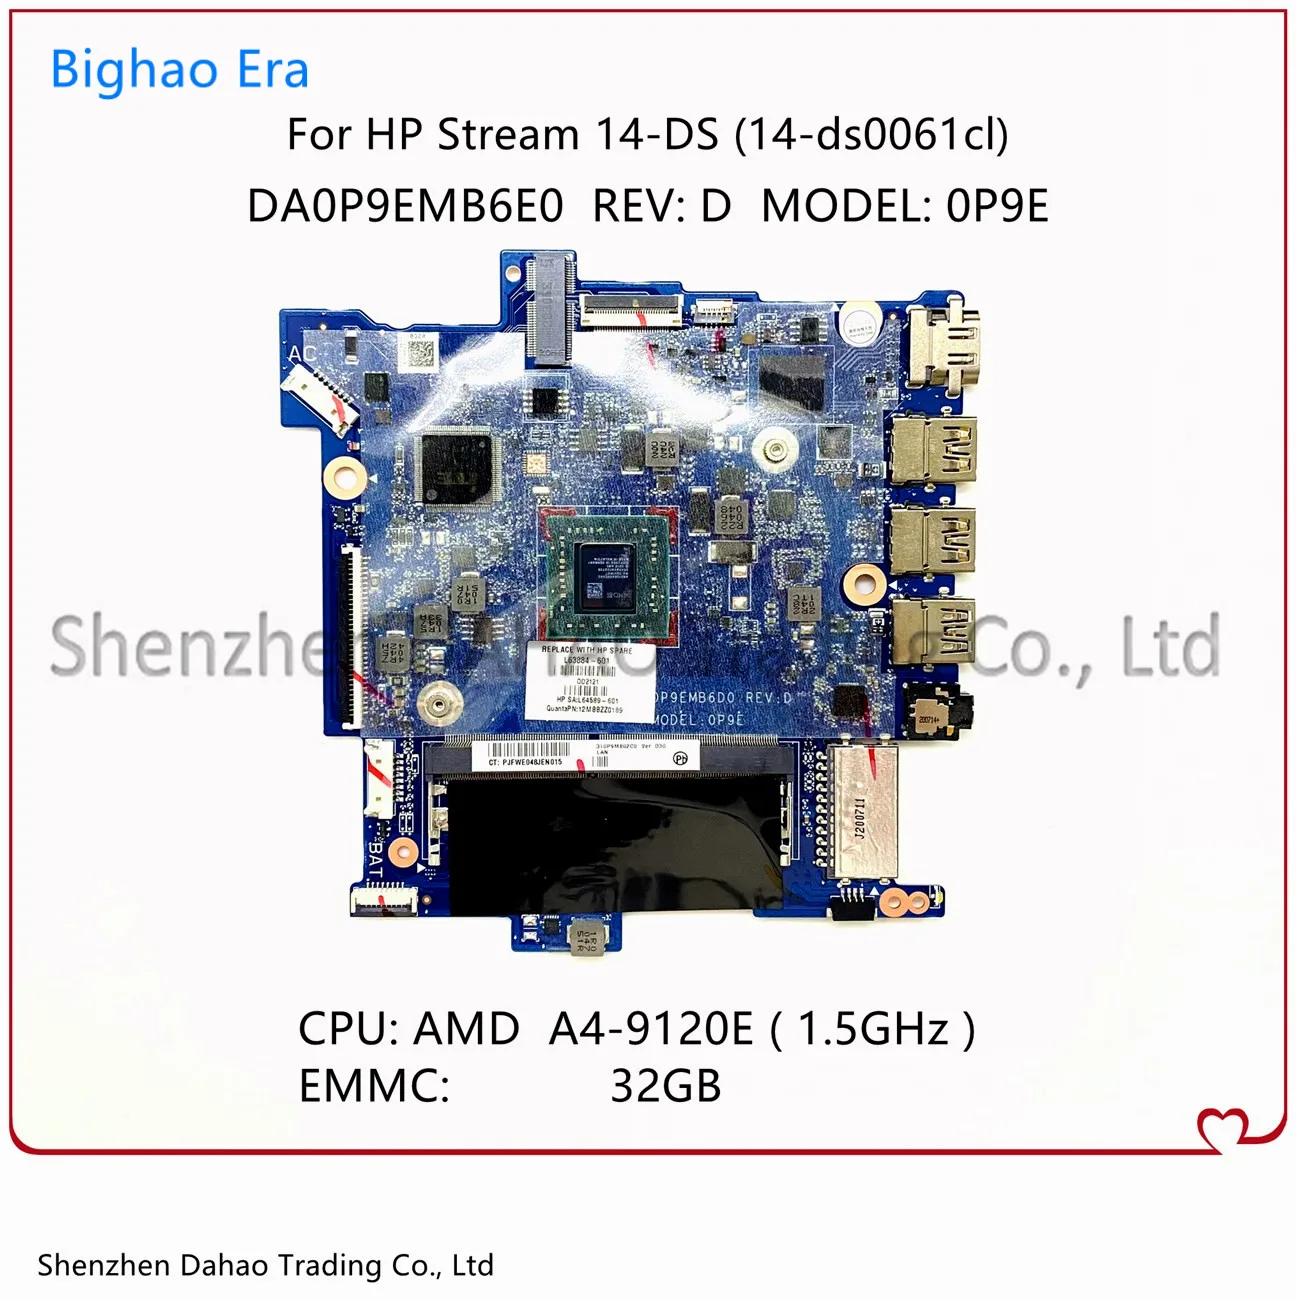 

L63884-601 L64589-601 For HP Stream 14-DS 14-ds0061cl 0P9E Laptop Motherboard DA0P9EMB6D0 Mainboard With A4-9120E CPU 32GB-EMMC